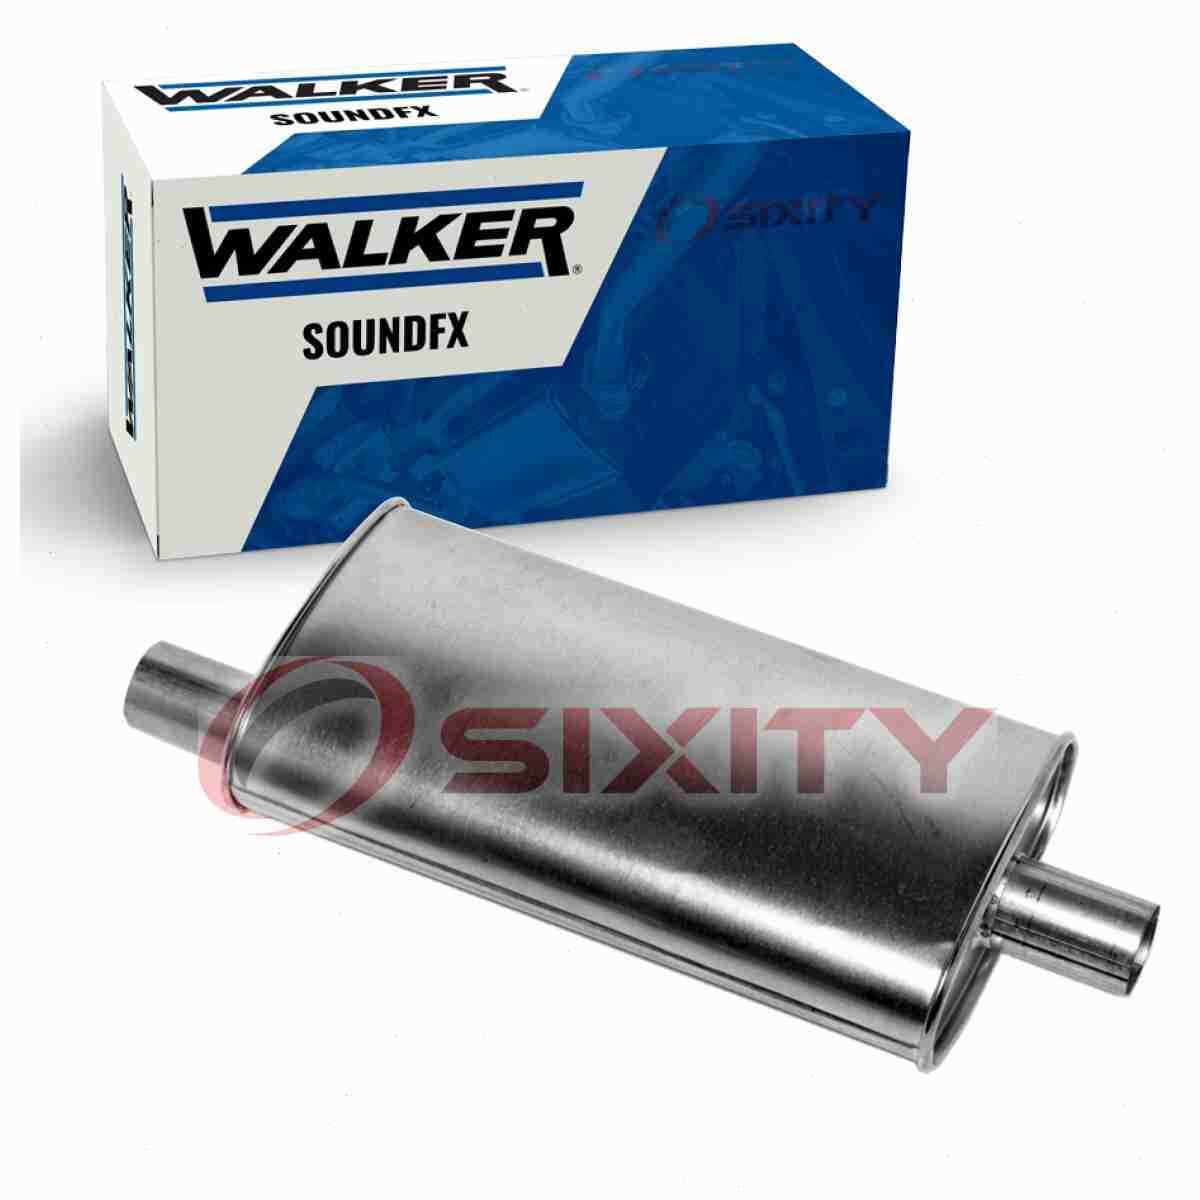 Walker SoundFX Exhaust Muffler for 1975-1979 Chrysler Cordoba 5.2L 5.9L 6.6L jo